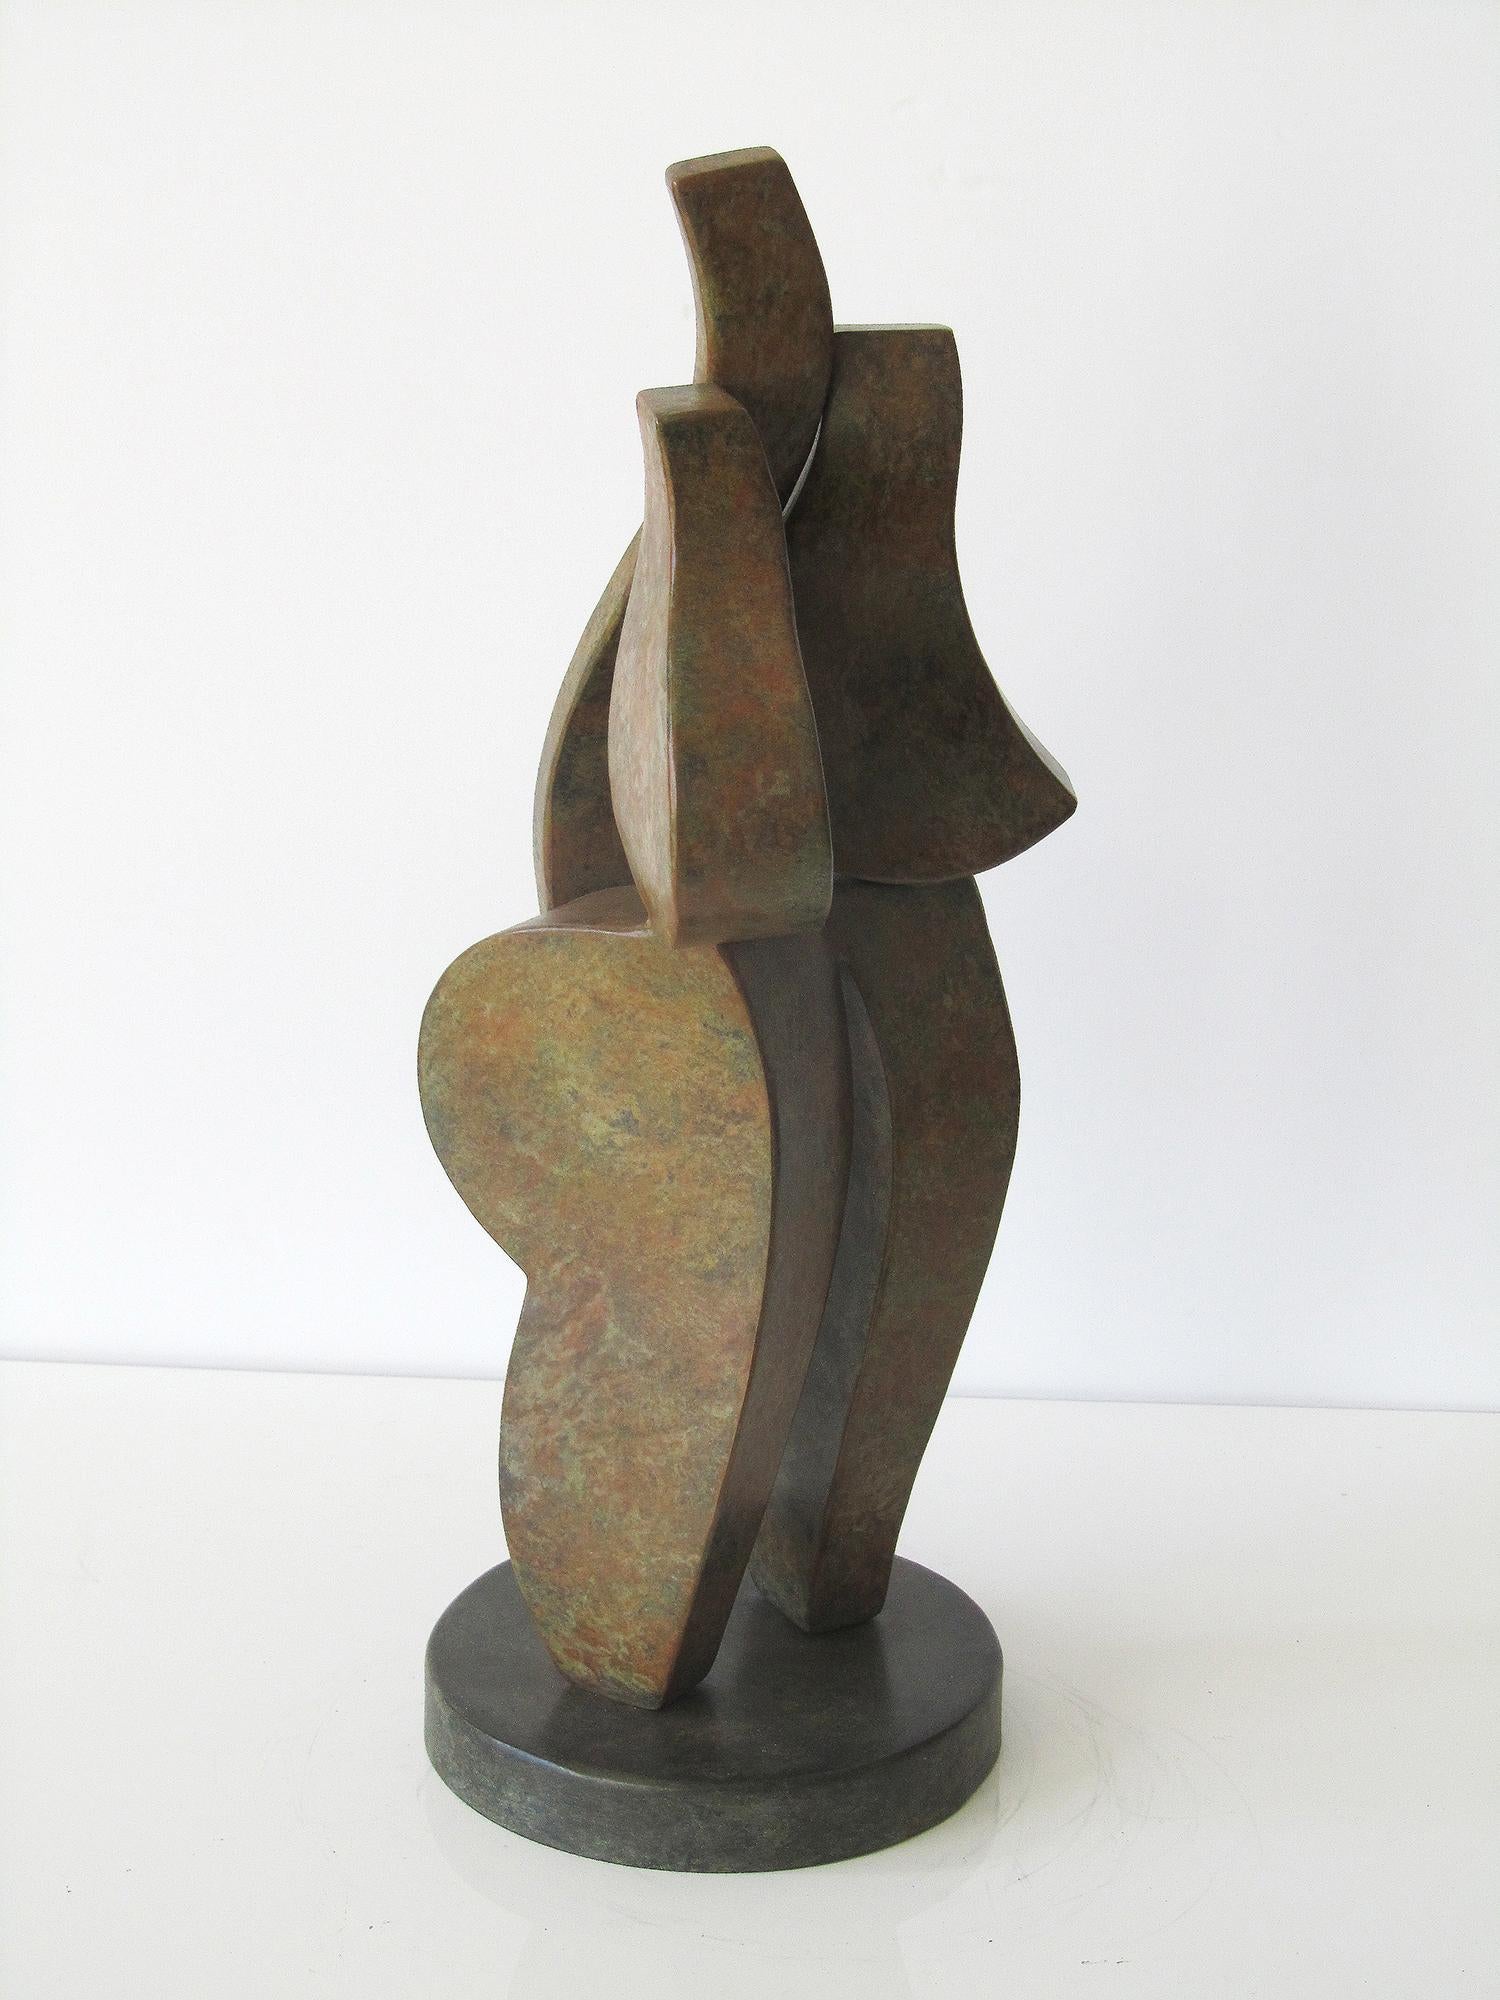 Hans Van de Bovenkamp Abstract Sculpture - "Androgynous Nano" small bronze sculpture 